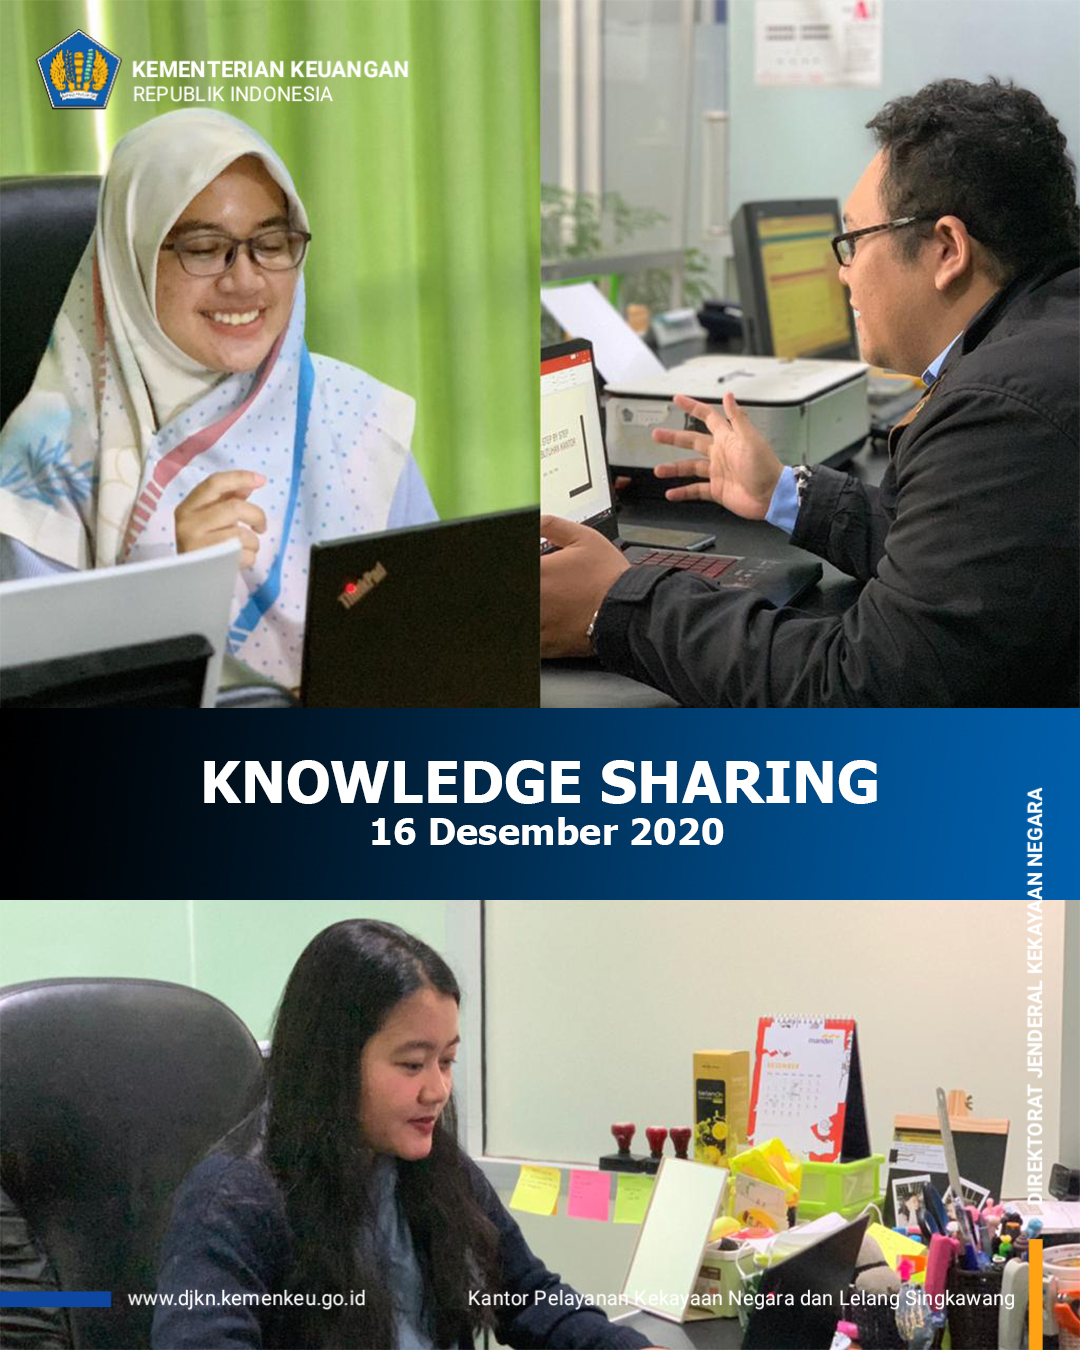 Knowledge Sharing: Pedoman Belanja Barang dan Smartphone Photography